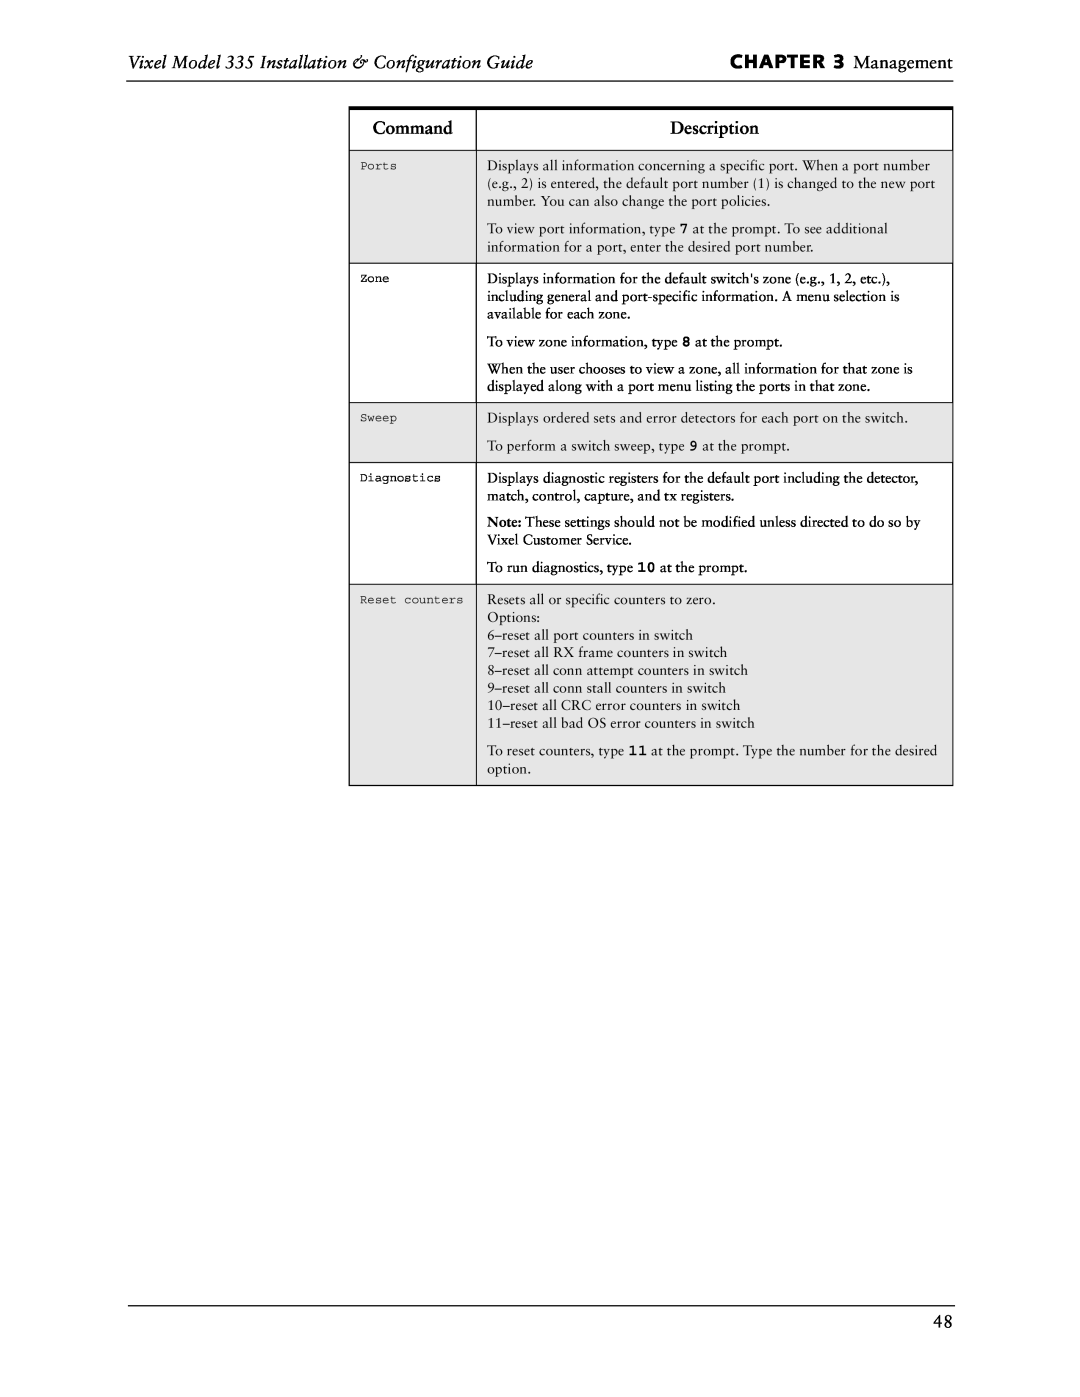 Vixel manual Management, Vixel Model 335 Installation & Configuration Guide, Command, Description 